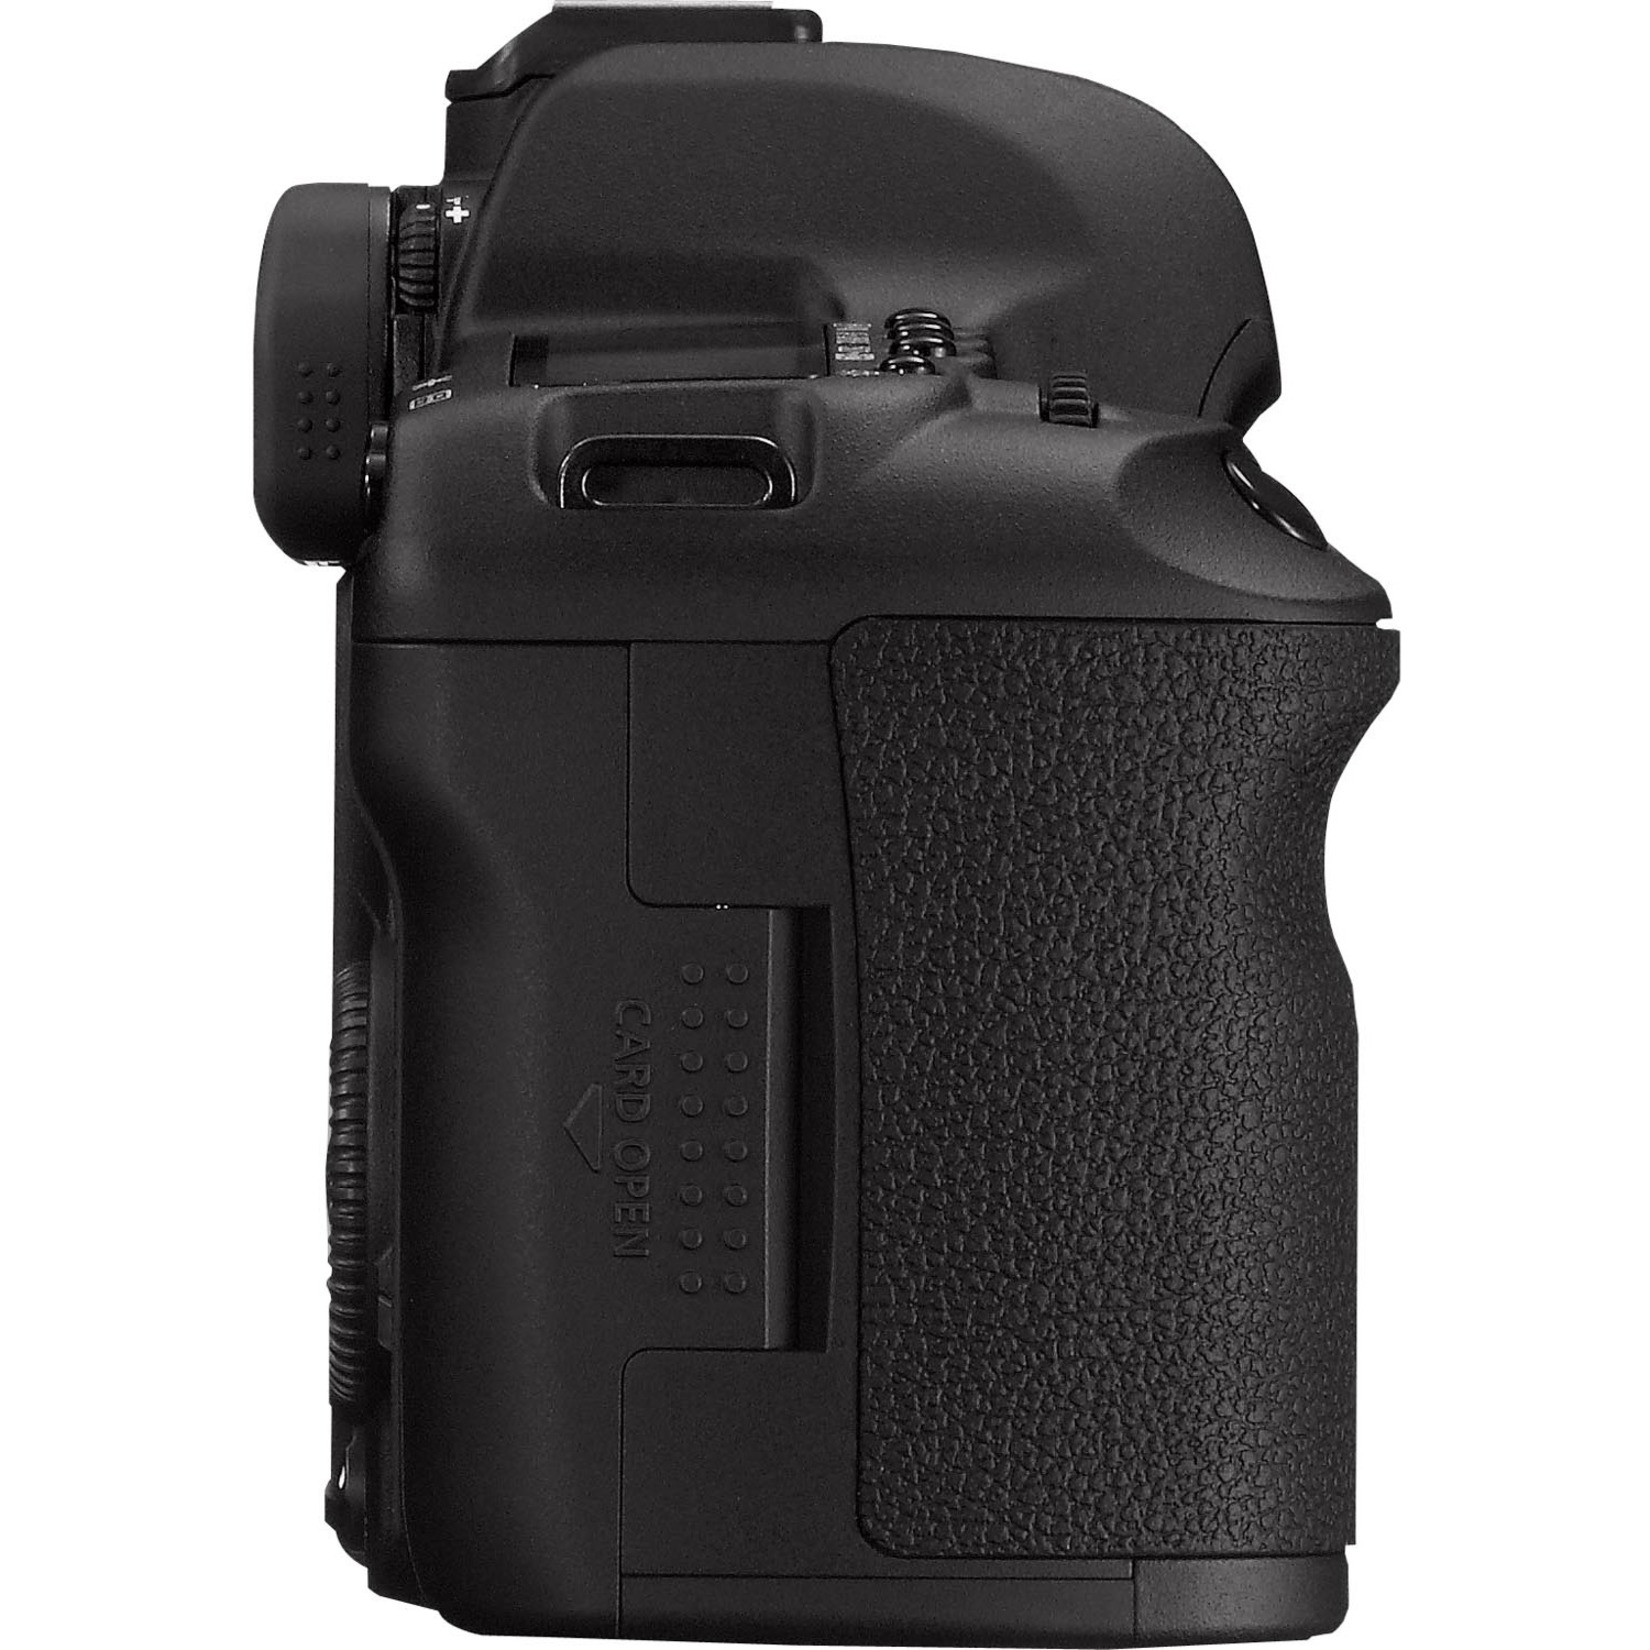 Canon EOS 5D Mark II 21.1 Megapixel Digital SLR Camera Body Only - image 4 of 7